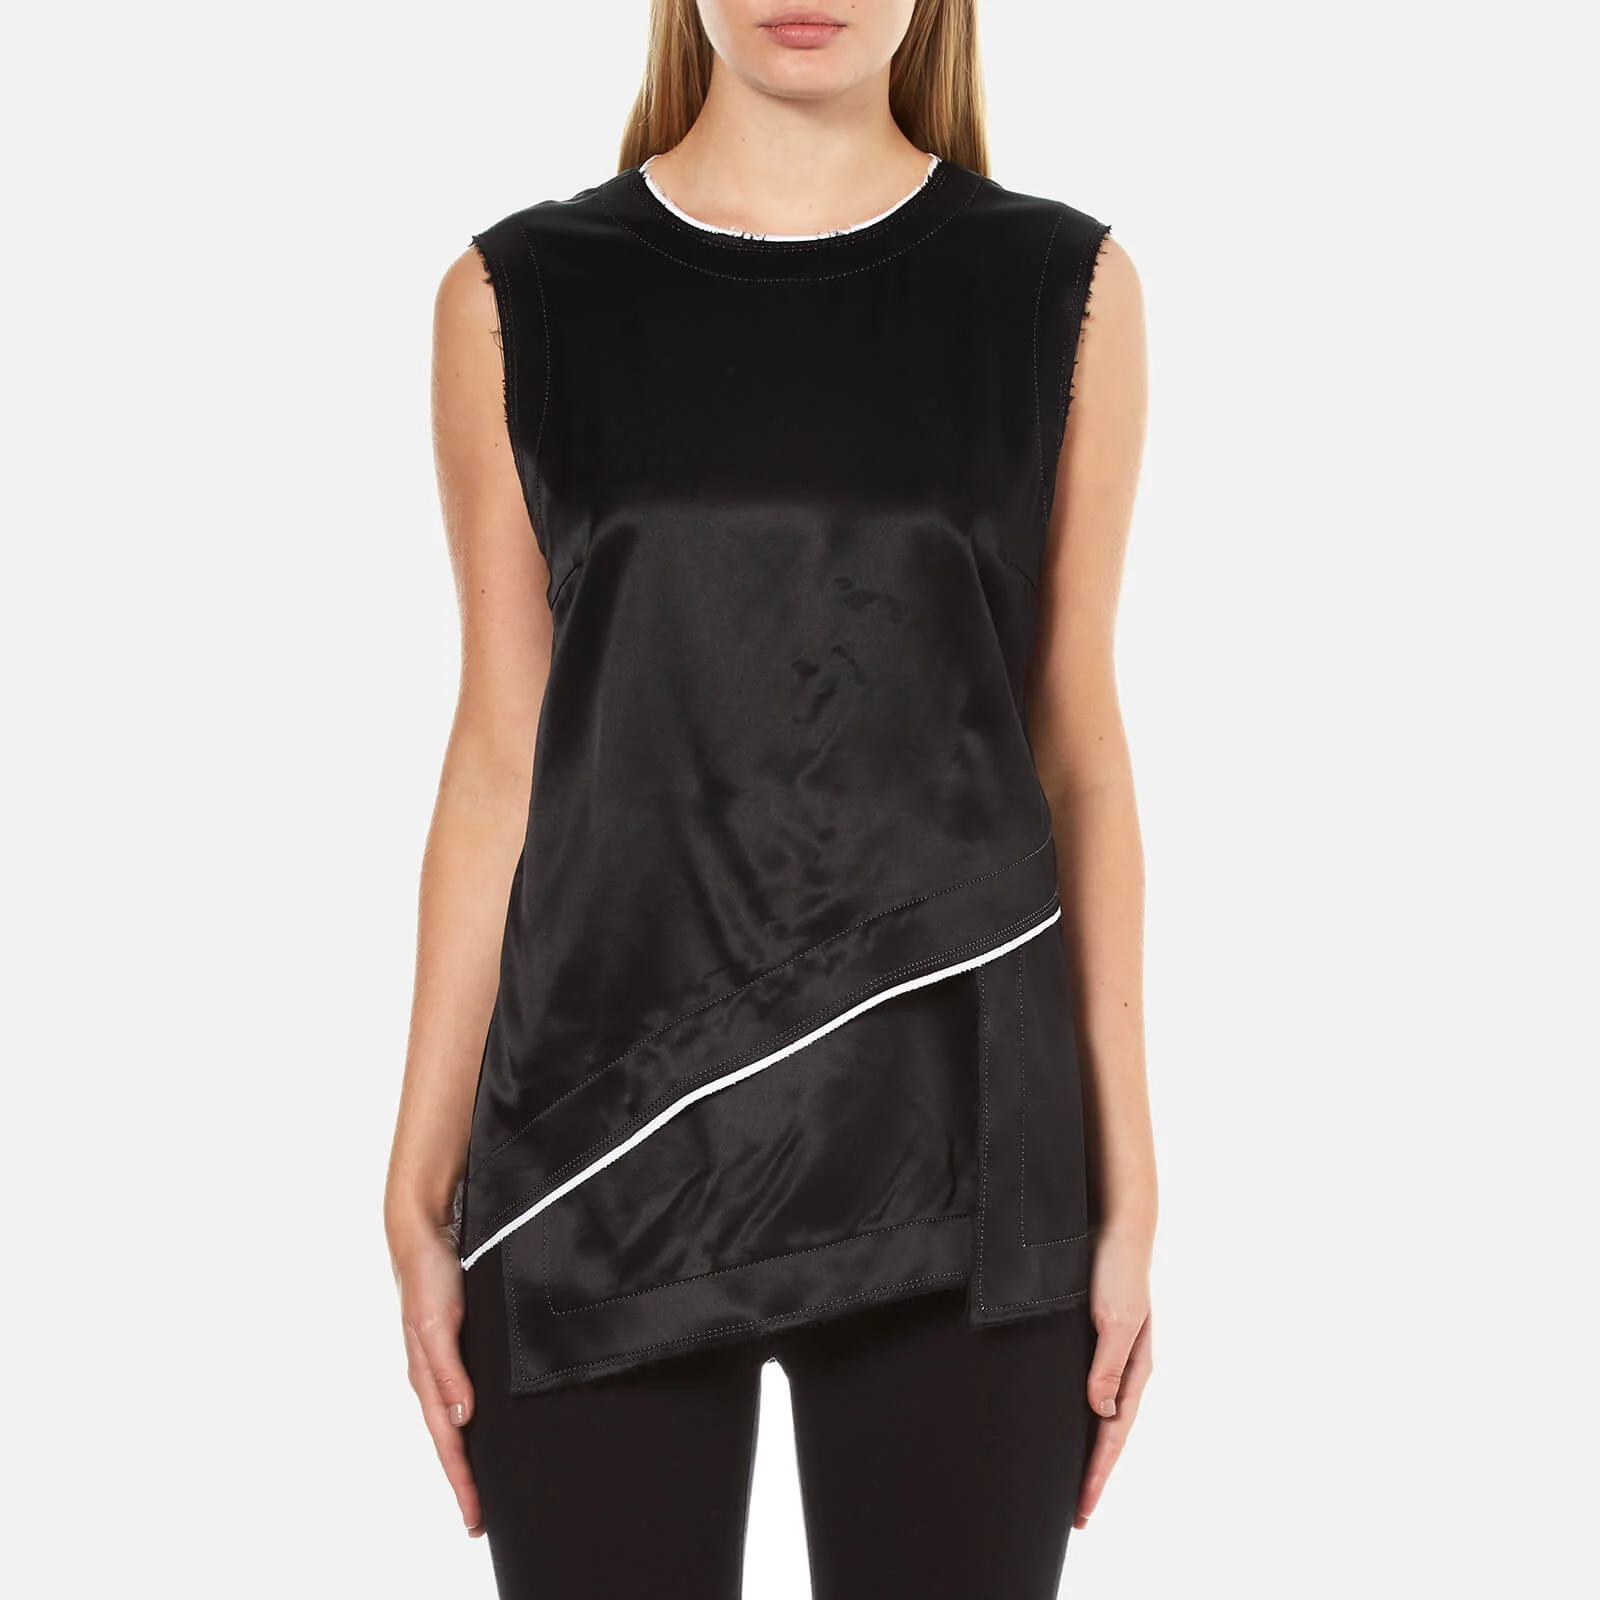 DKNY Women's Sleeveless Layered Shirt with Asymmetrical Hem and Raw Edge Detail - Black/Chalk Image 1